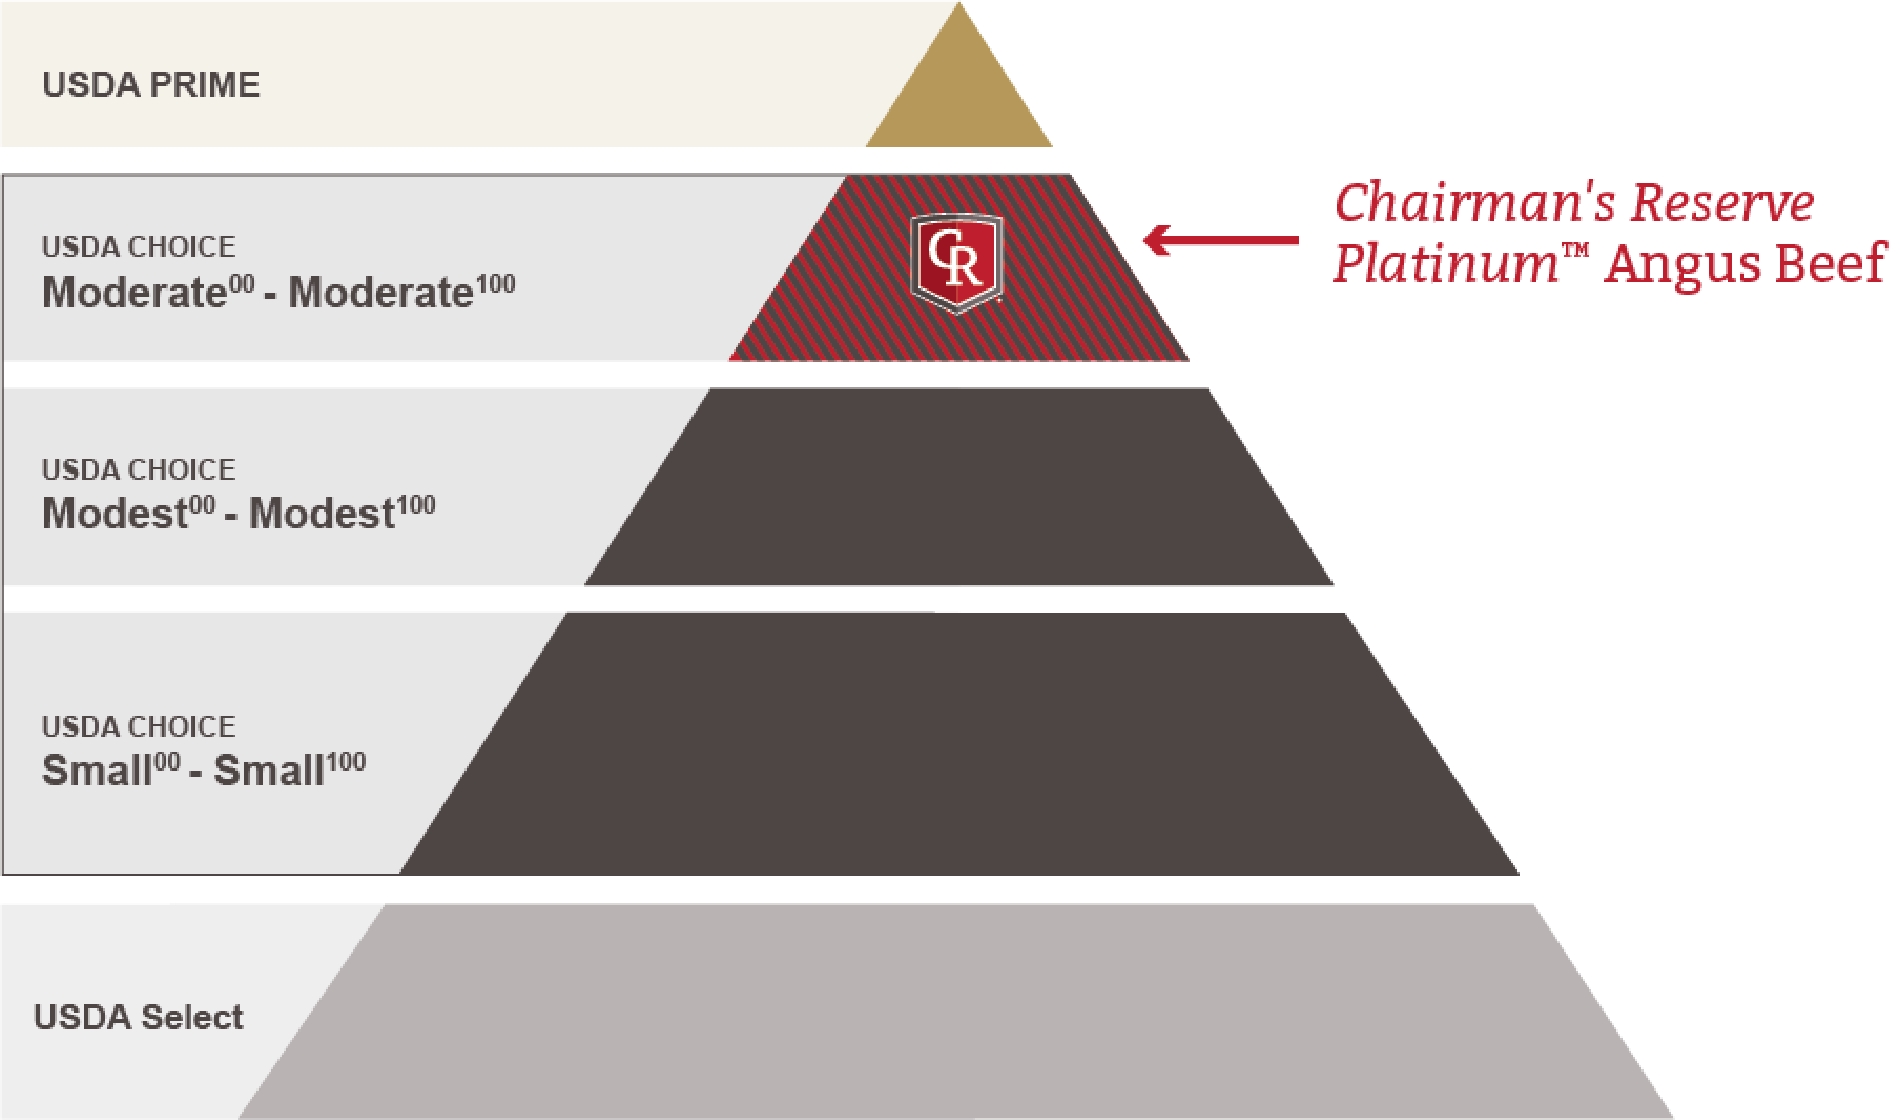 Chairman's Reserve Platinum Angus beef pyramid